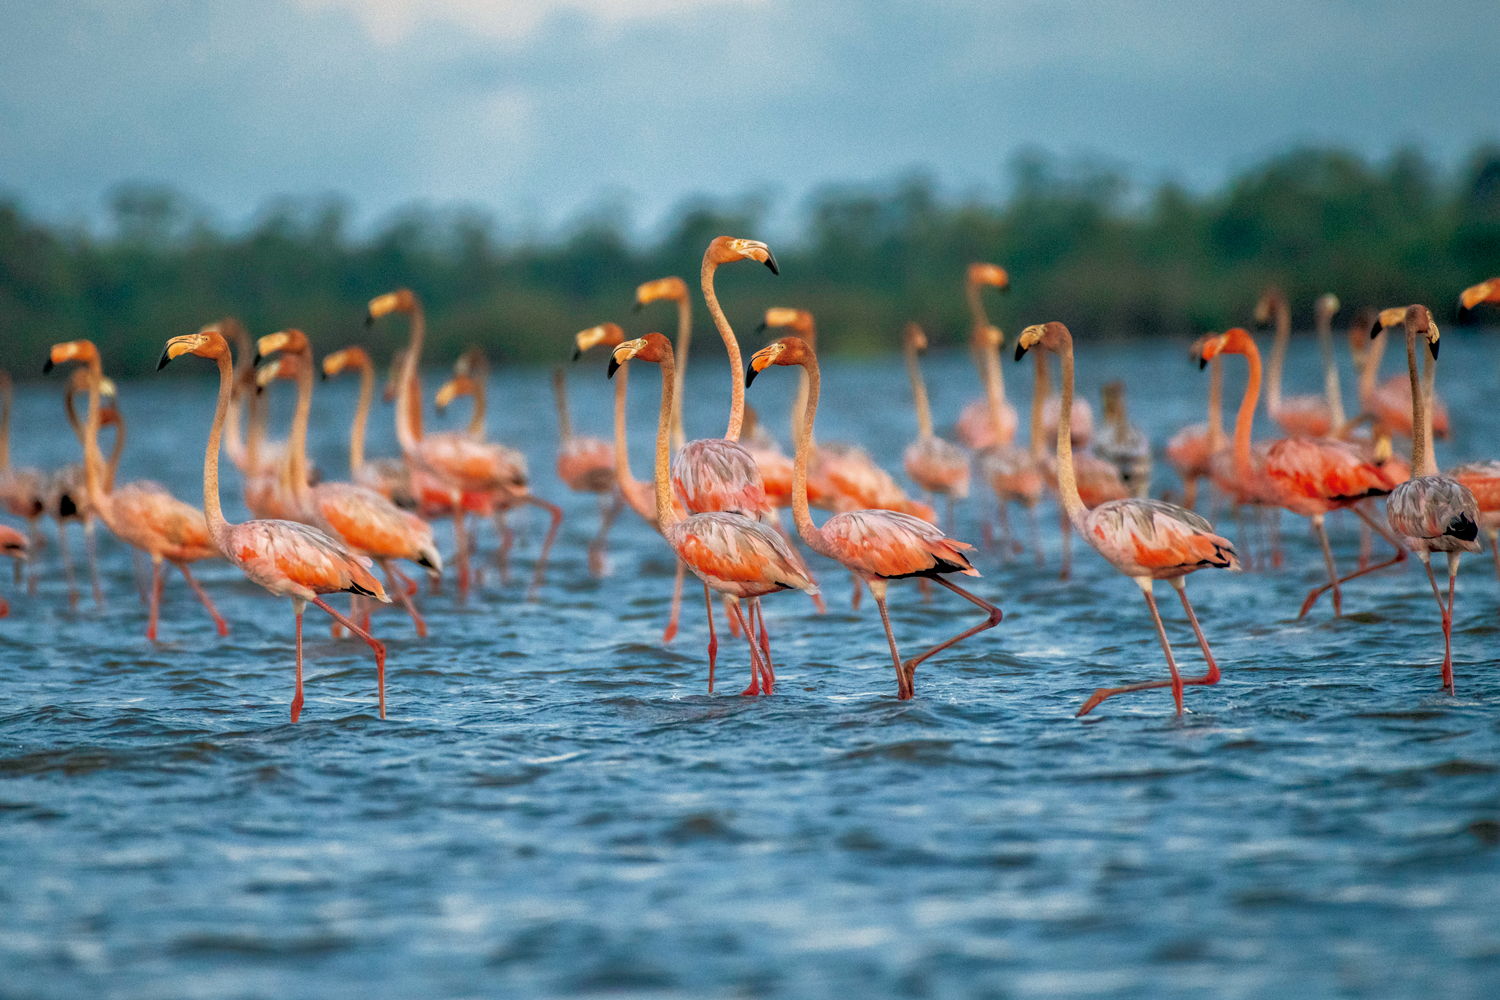 Flamingos (Phoenicopterus ruber) no lago Bonome - Amapá